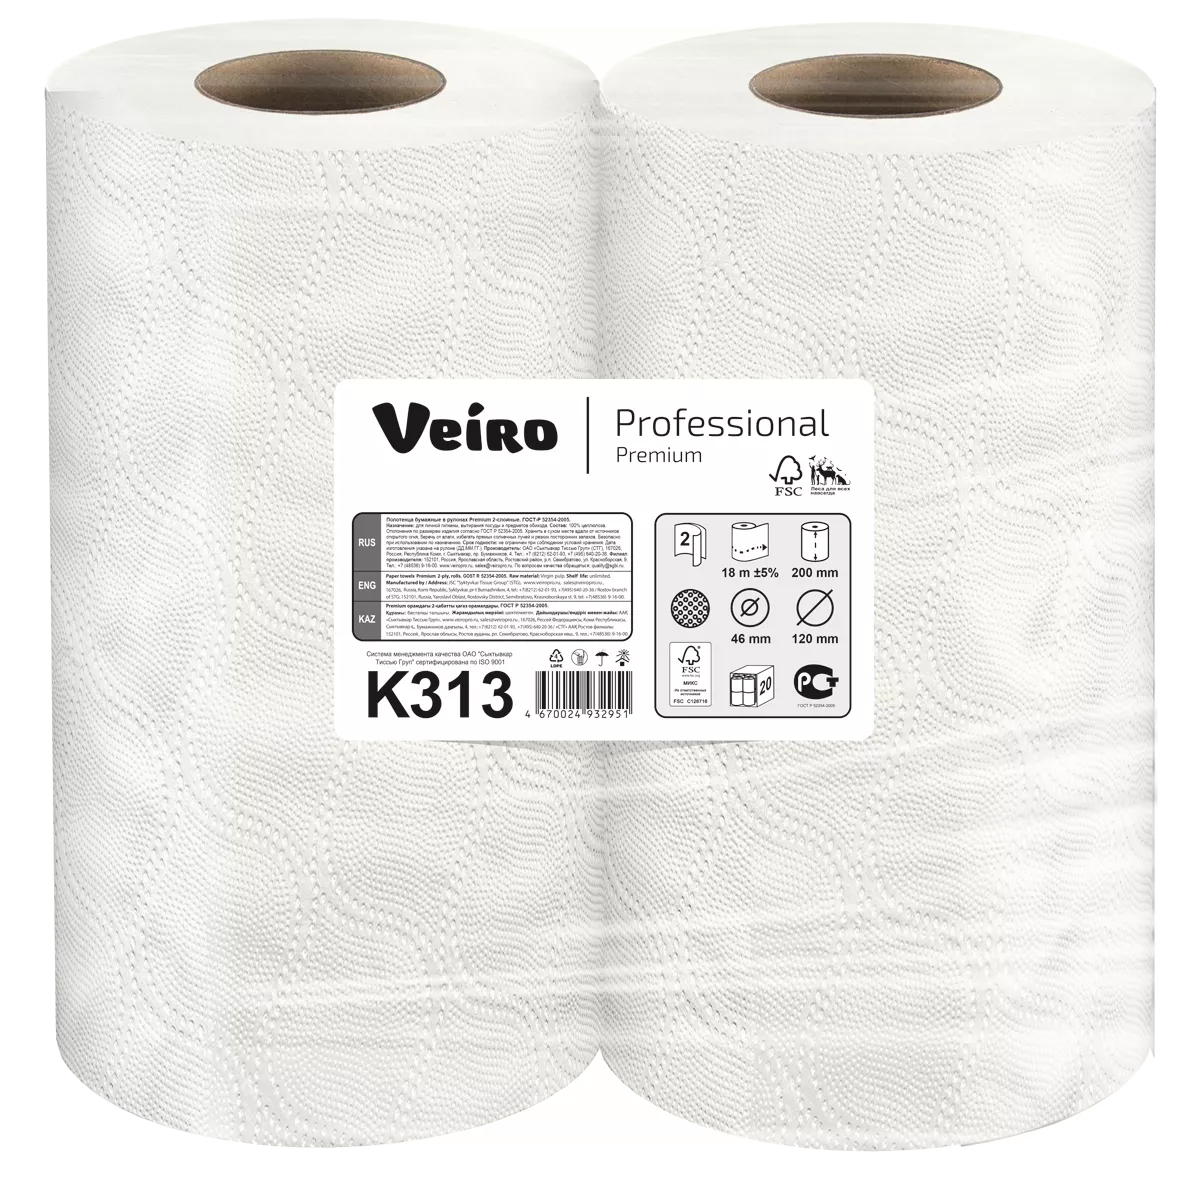 T me premiumz. Veiro professional Premium k313. Туалетная бумага Veiro professional Premium t309,. Полотенца бумажные Veiro professional. Veiro professional t11200.